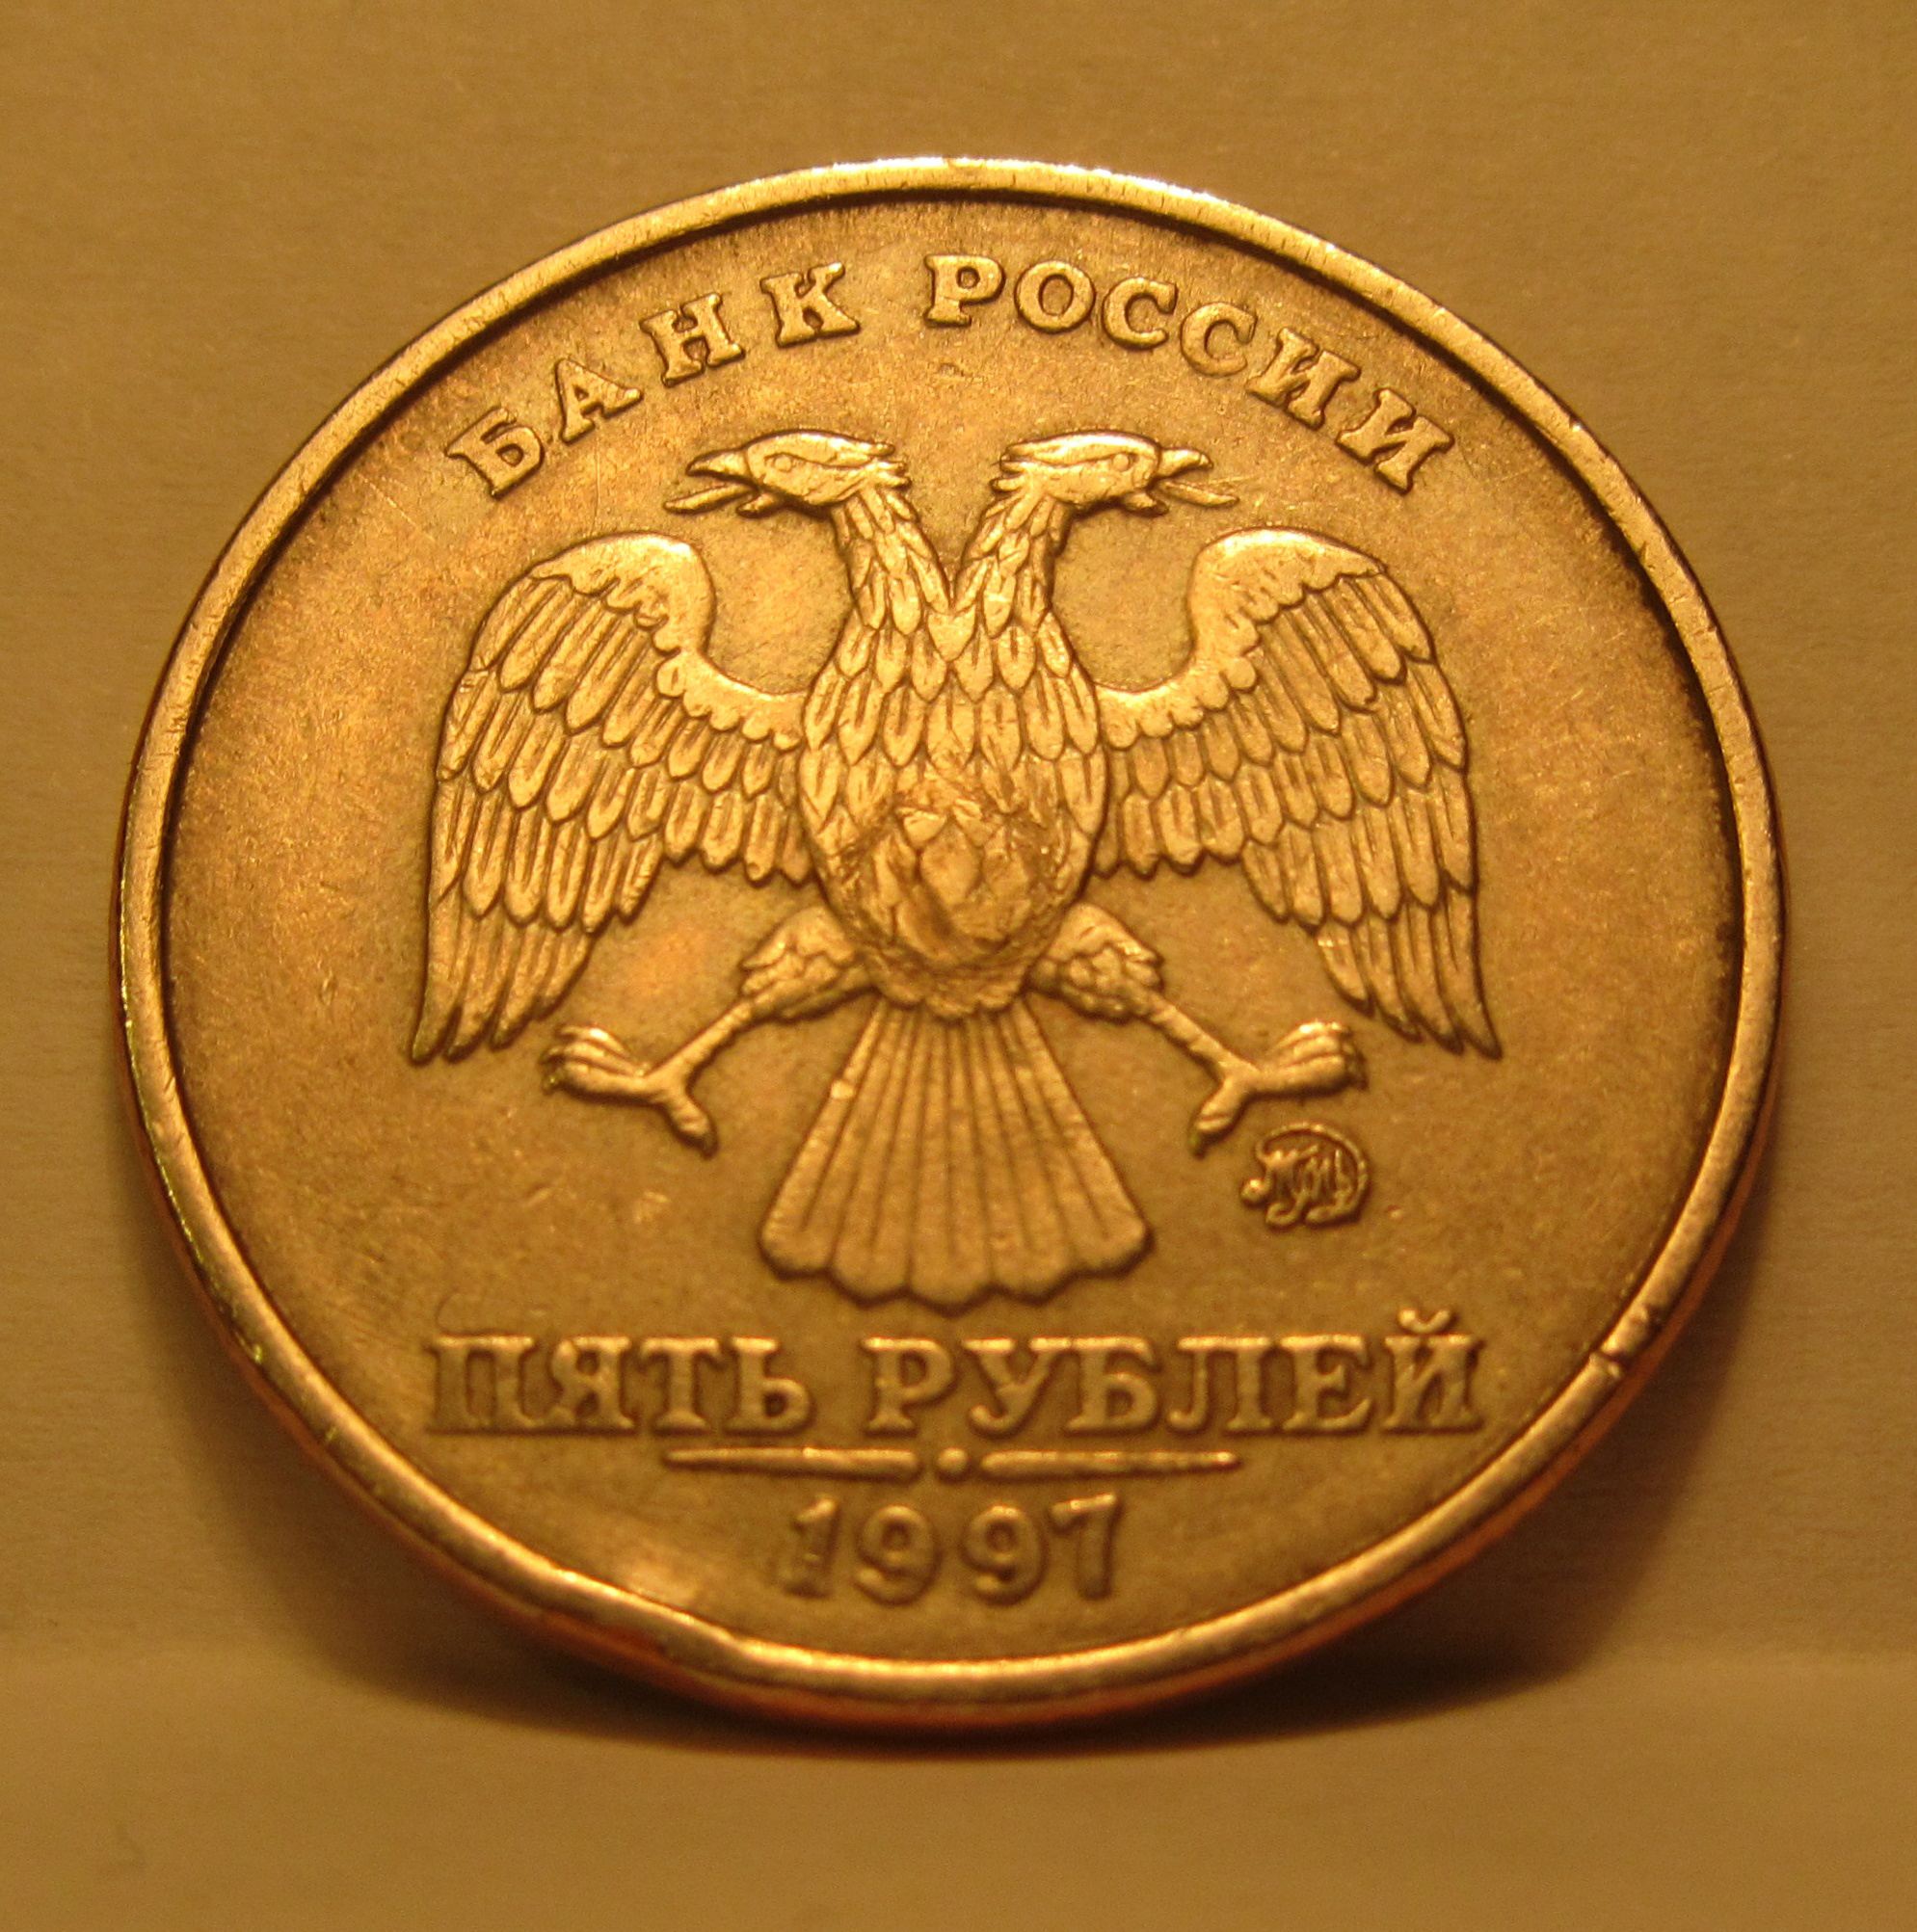 5 рублей орел. Монета 10 двуглавый Орел.